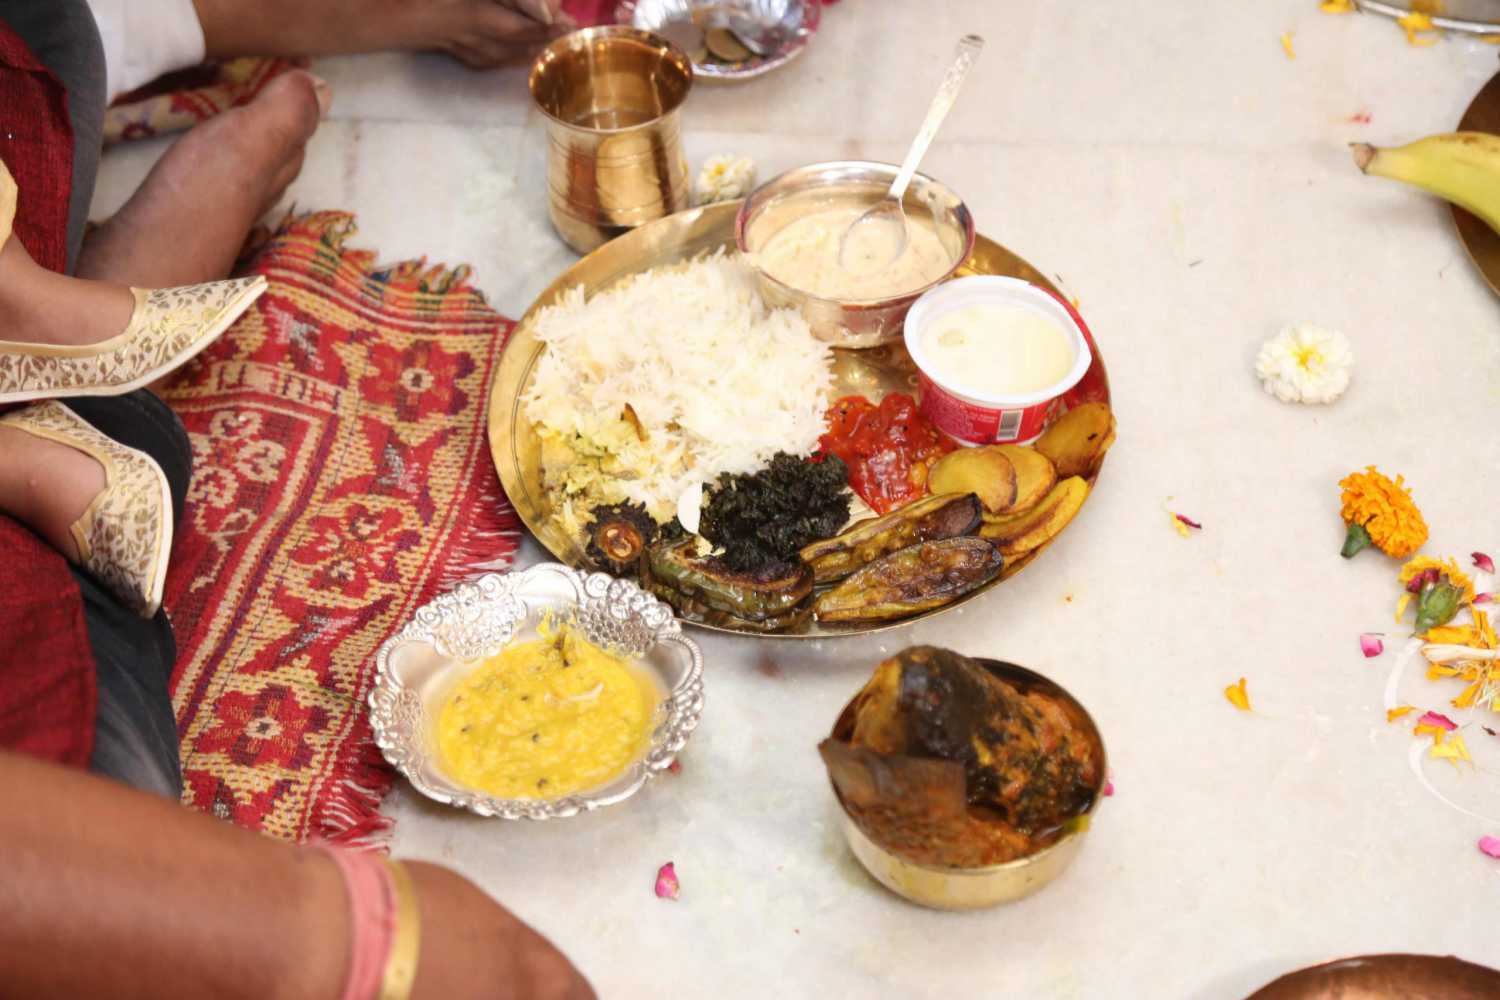 II. The Significance of Food in Ceremonies